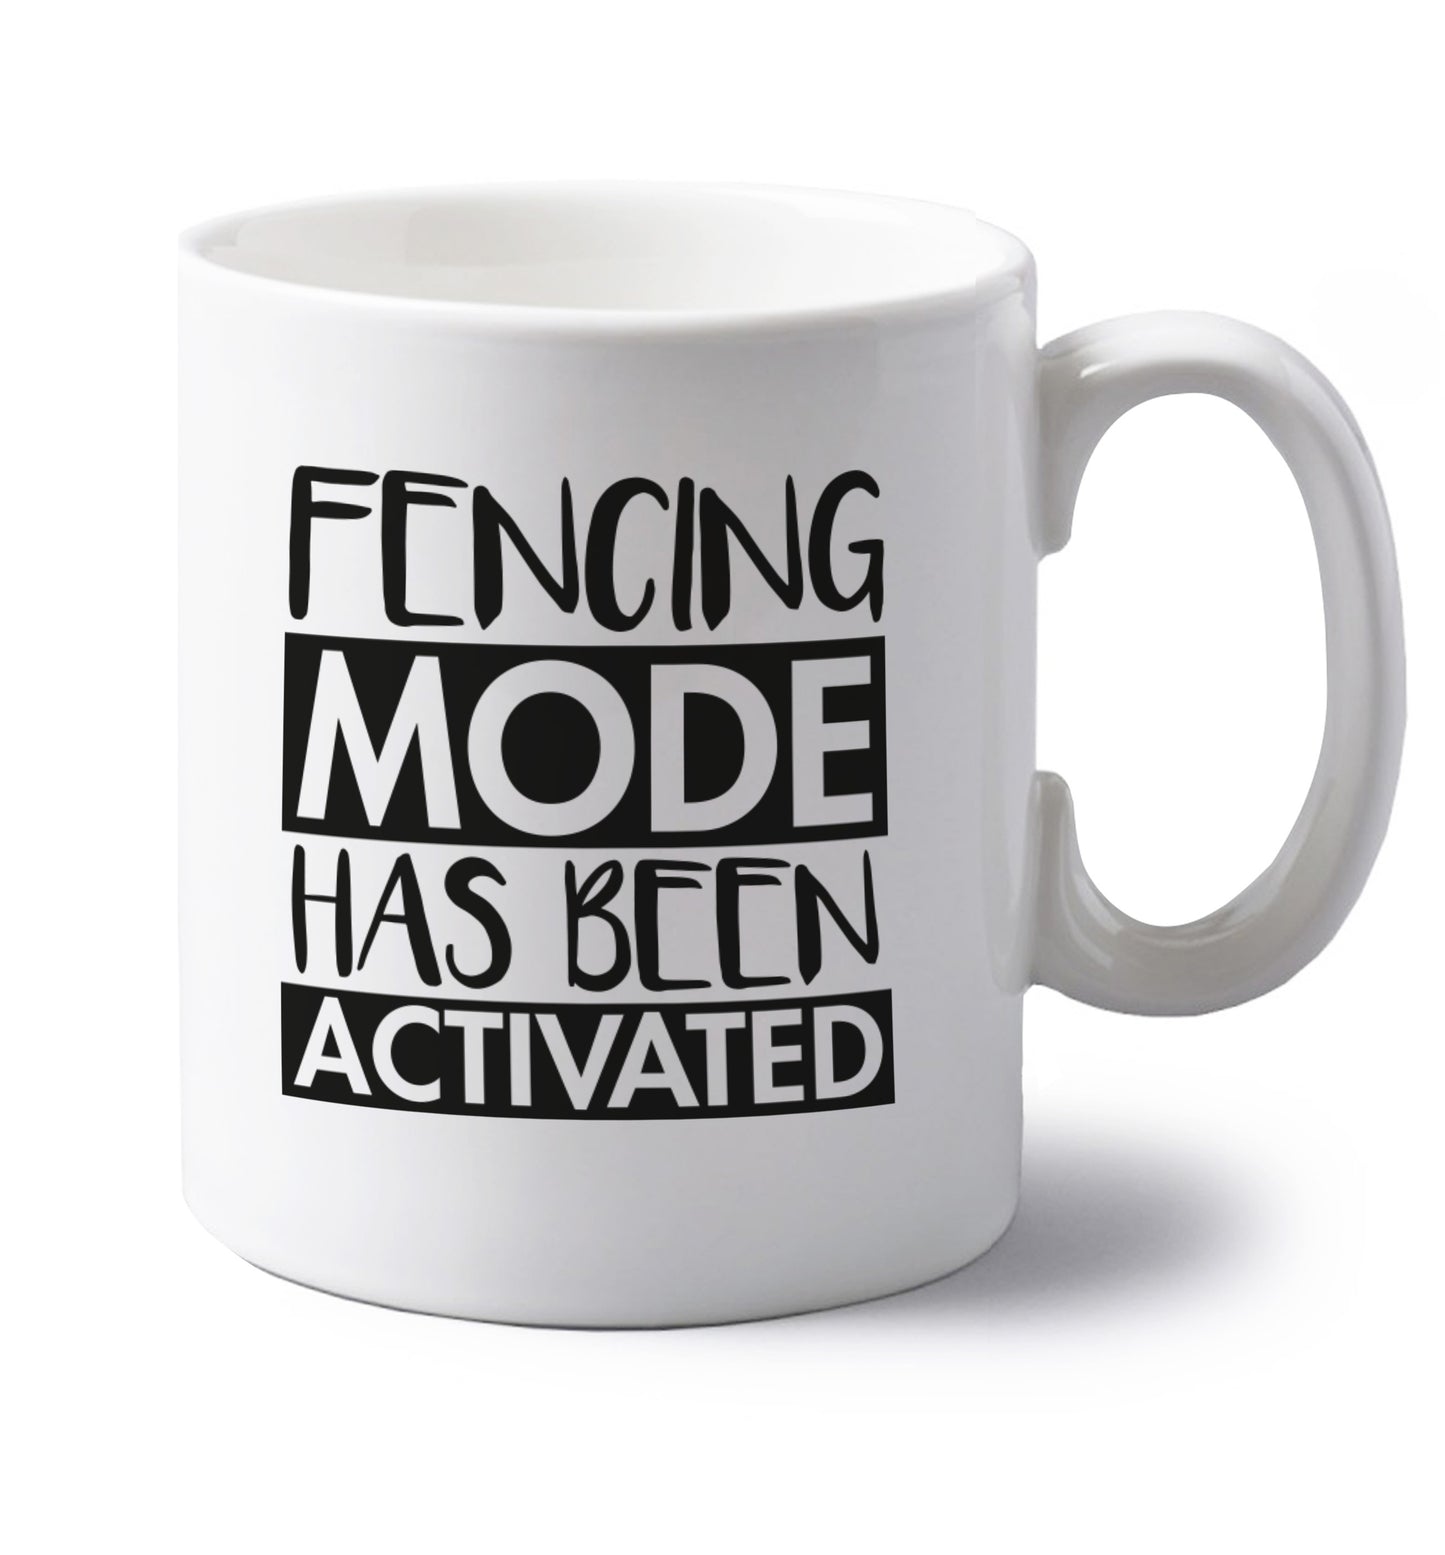 Fencing mode activated left handed white ceramic mug 